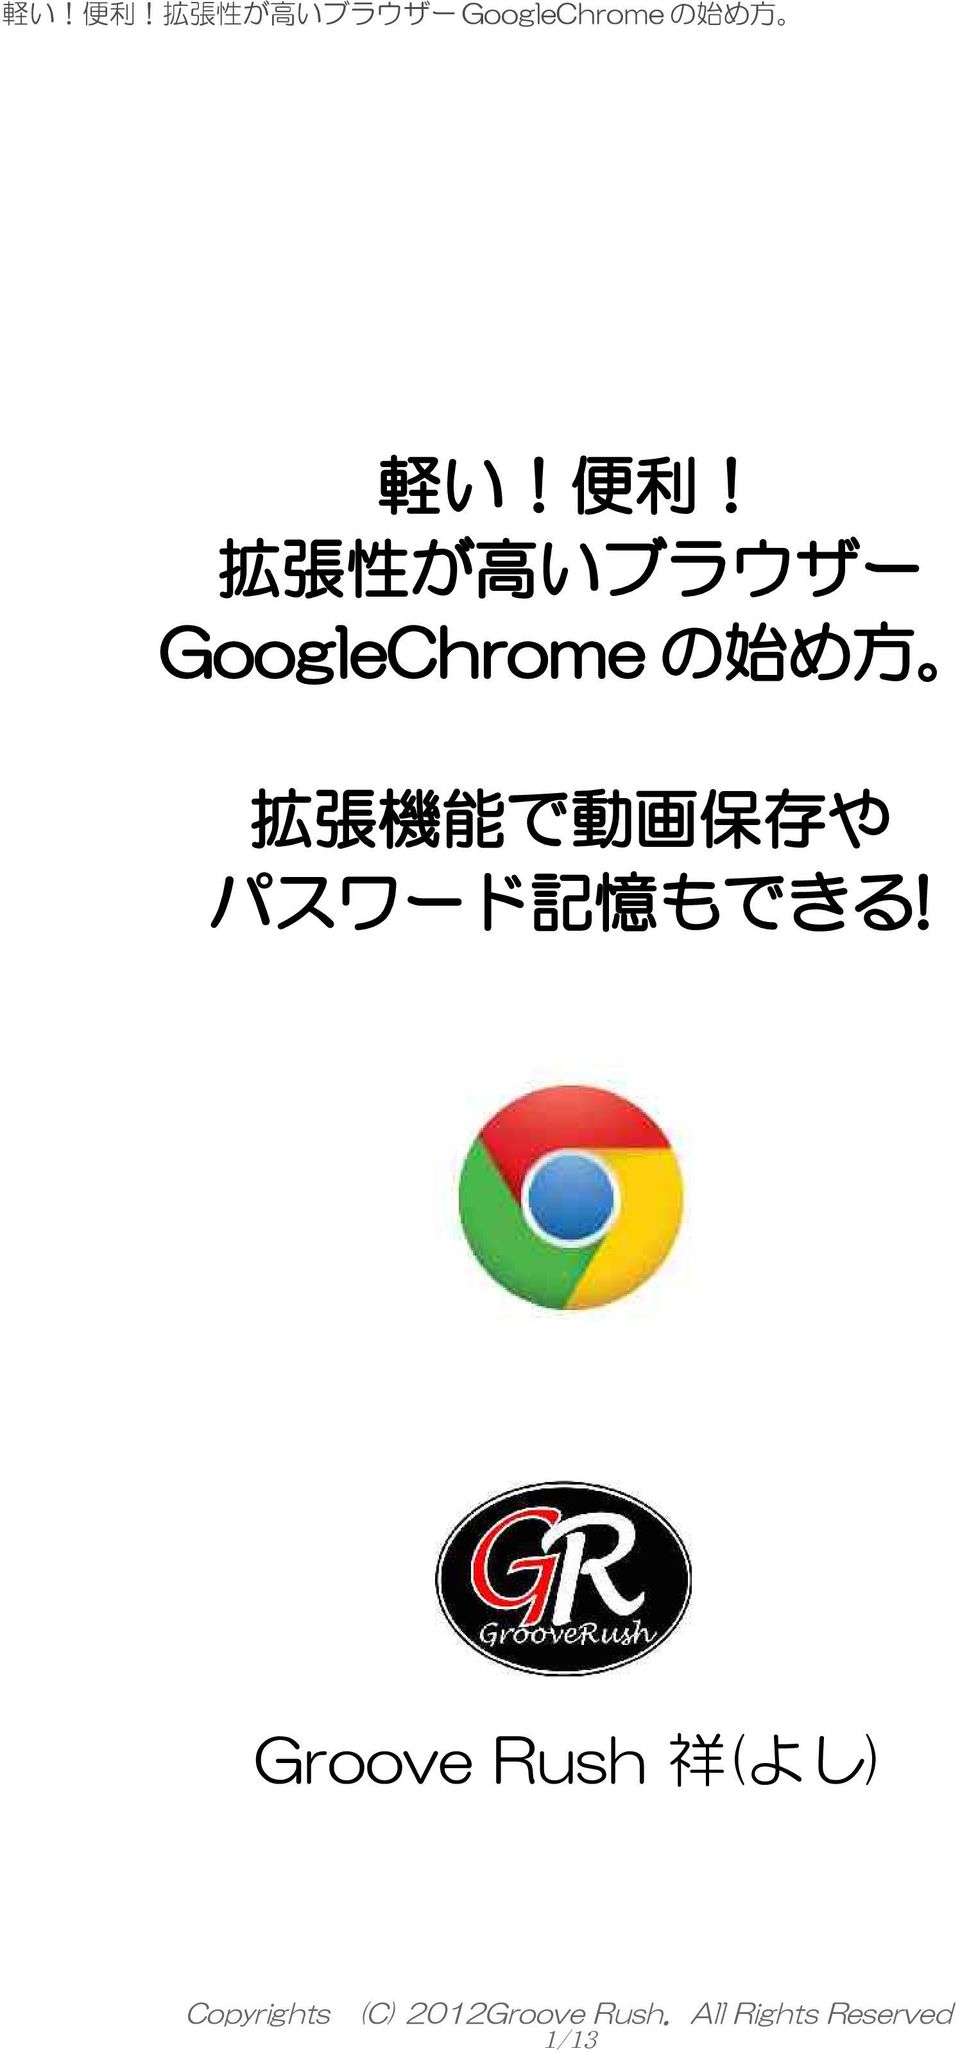 GoogleChrome の 始 め 方 拡 張 機